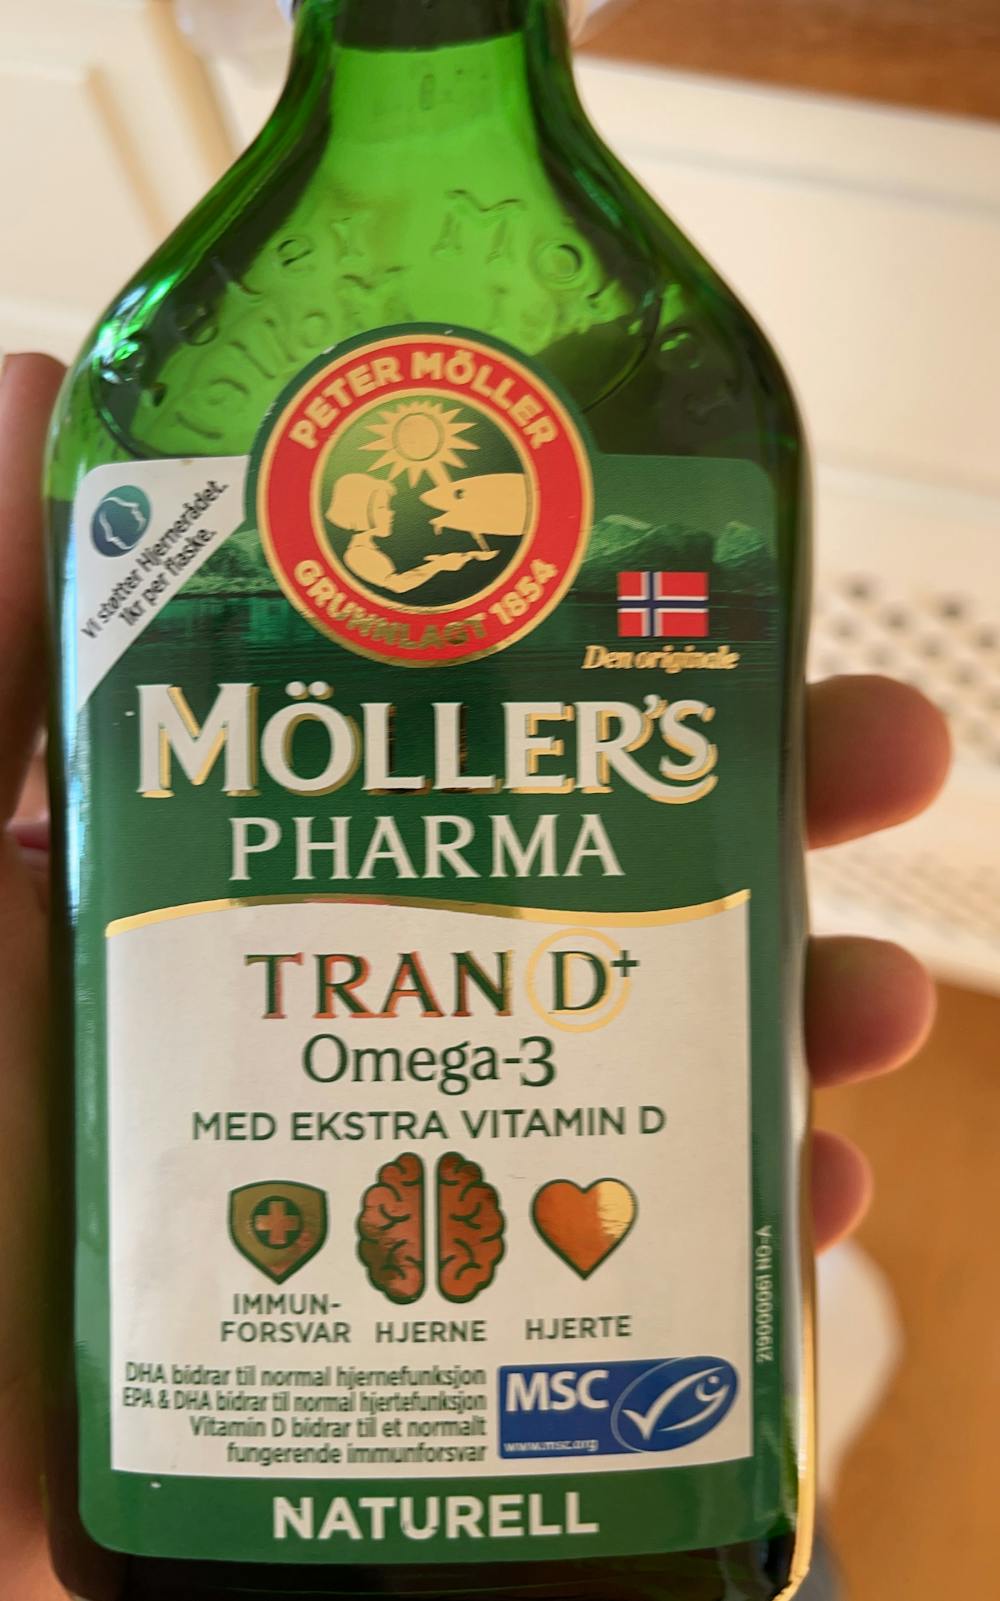 Tran D+ Omega-3, Möllers